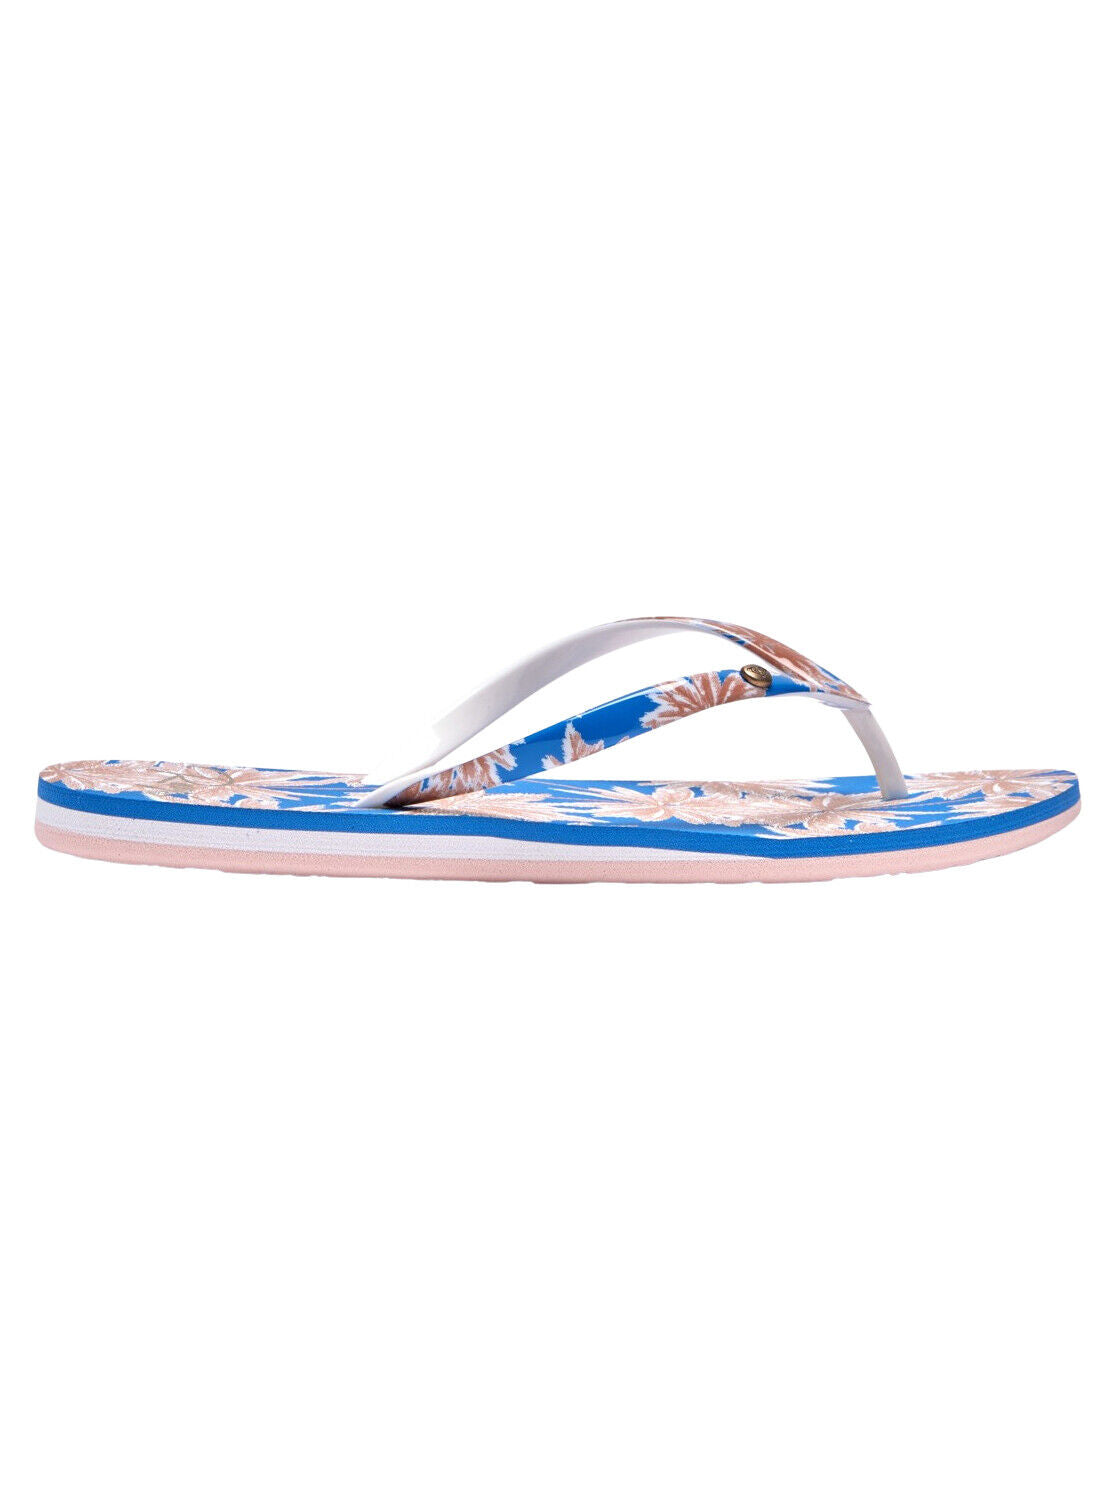 Roxy Ladies Portofino Light Blue Flip Flops Beach Sandals